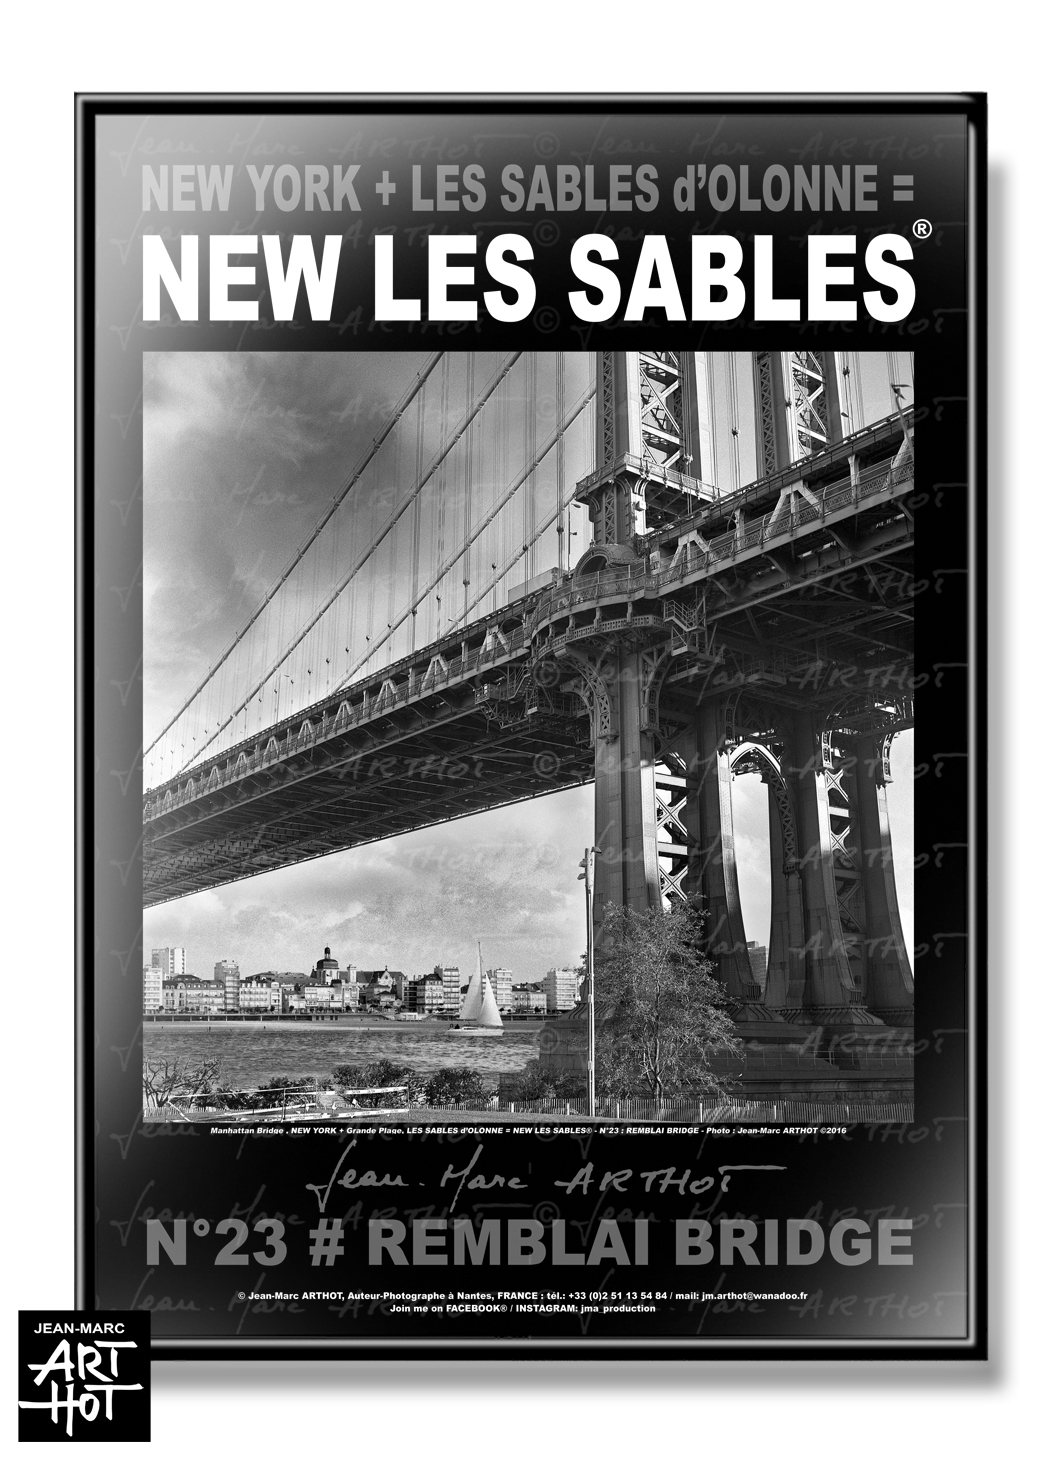 arthot-photo-art-b&w-new-york-vendee-sables-olonne-newlessables-023-pont-plage-AFFICHE